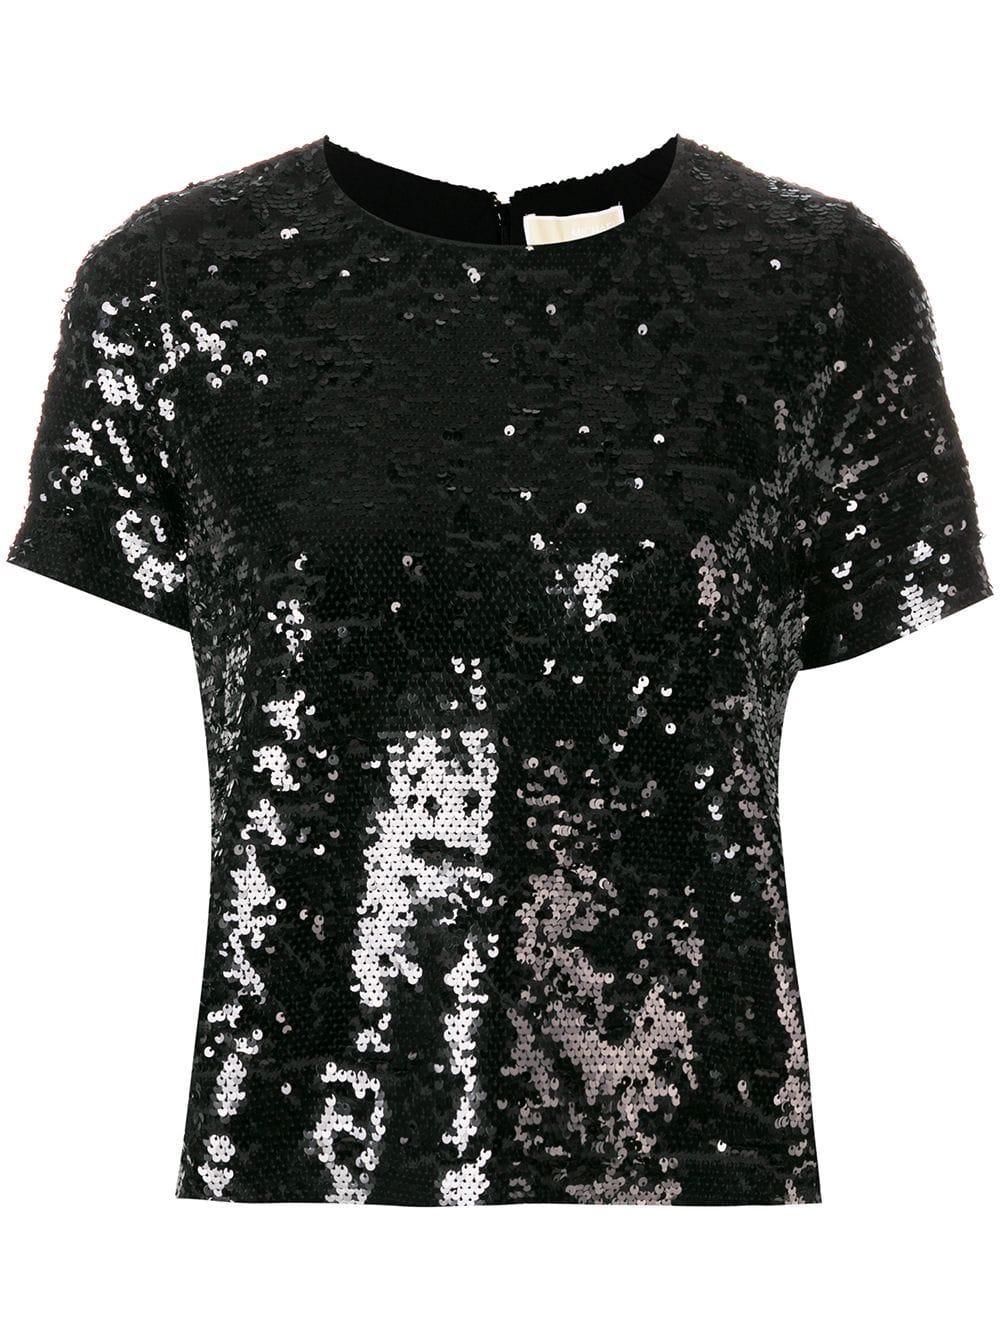 Michael Kors Long Top black glittery Fashion Tops Long Tops 